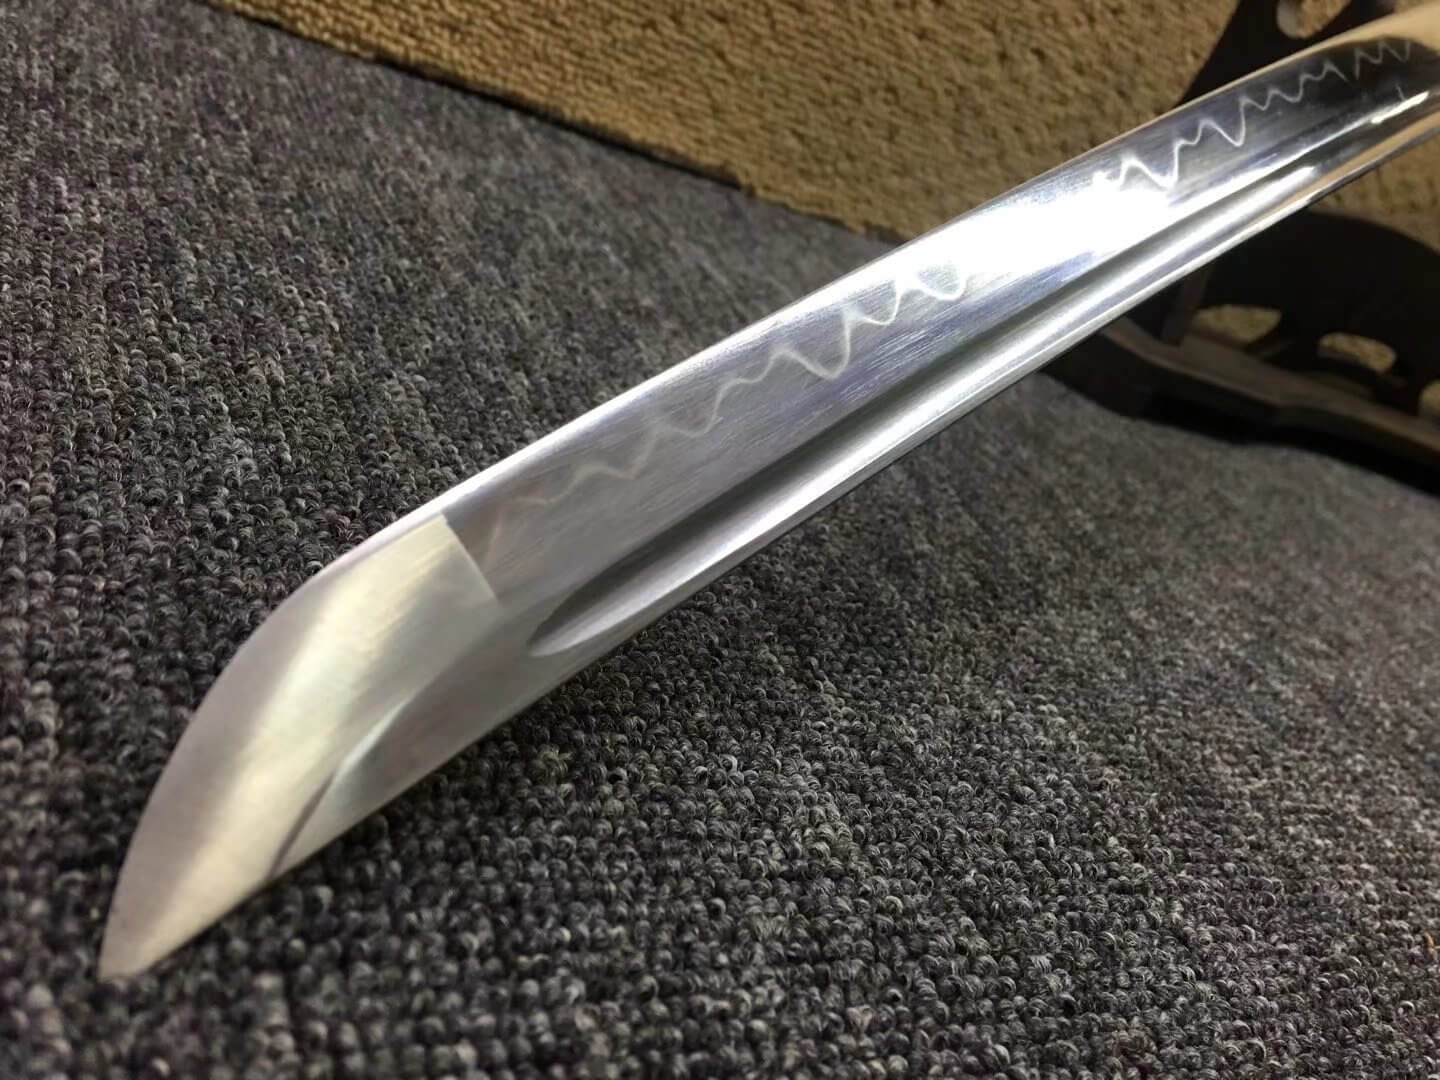 Katana,High carbon steel burn blade,Rosewood scabbard,Length 39" - Chinese sword shop